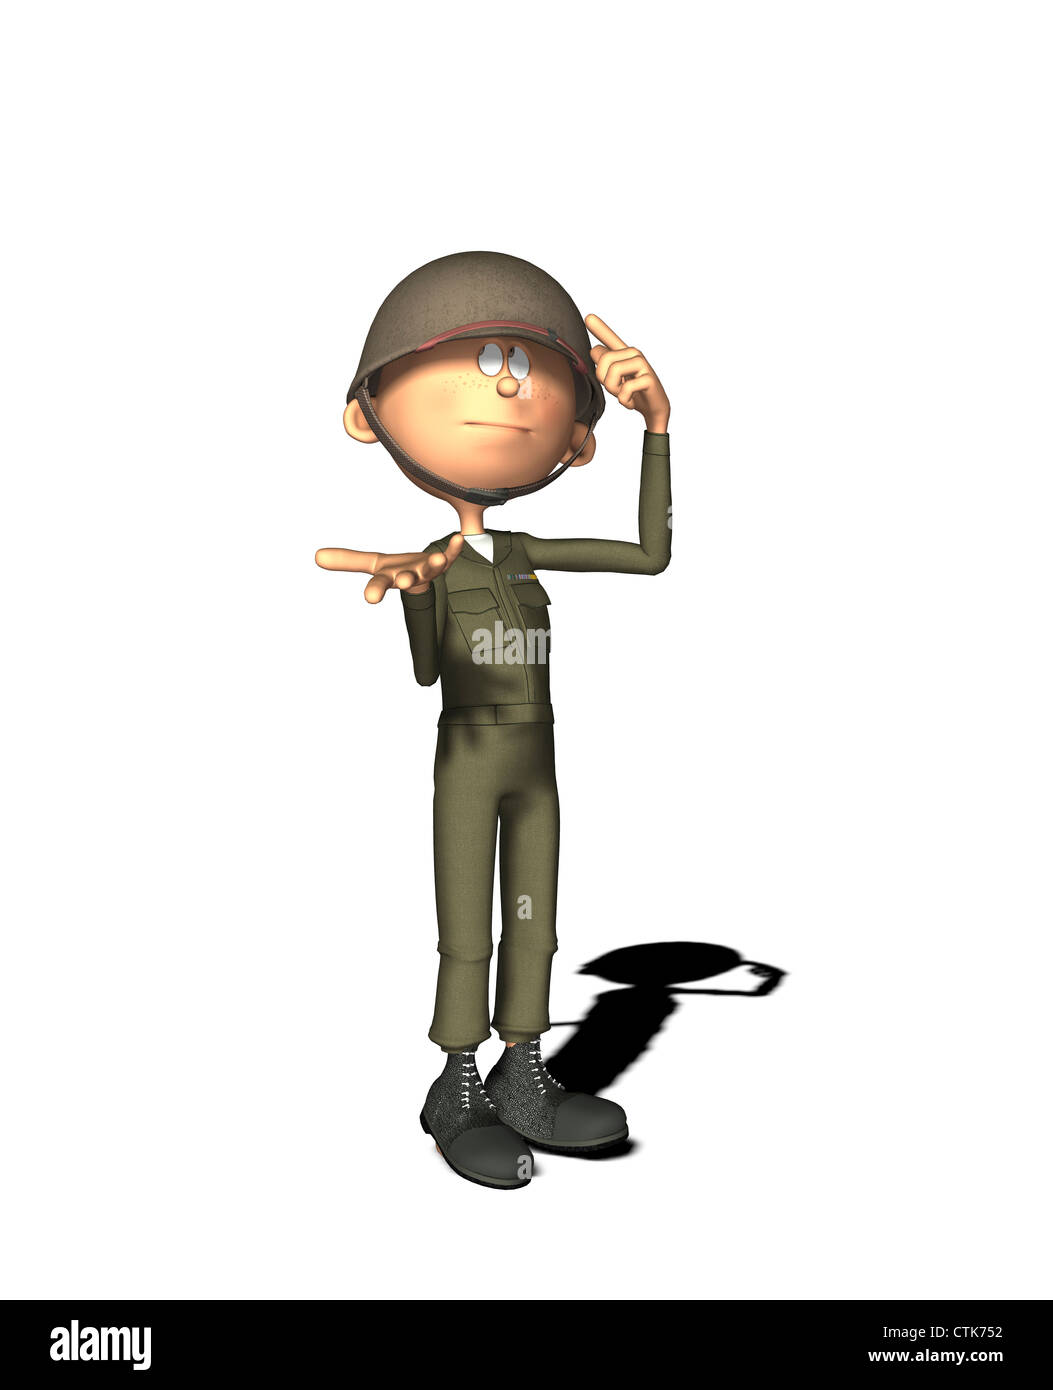 cartoon figure soldier Stock Photo